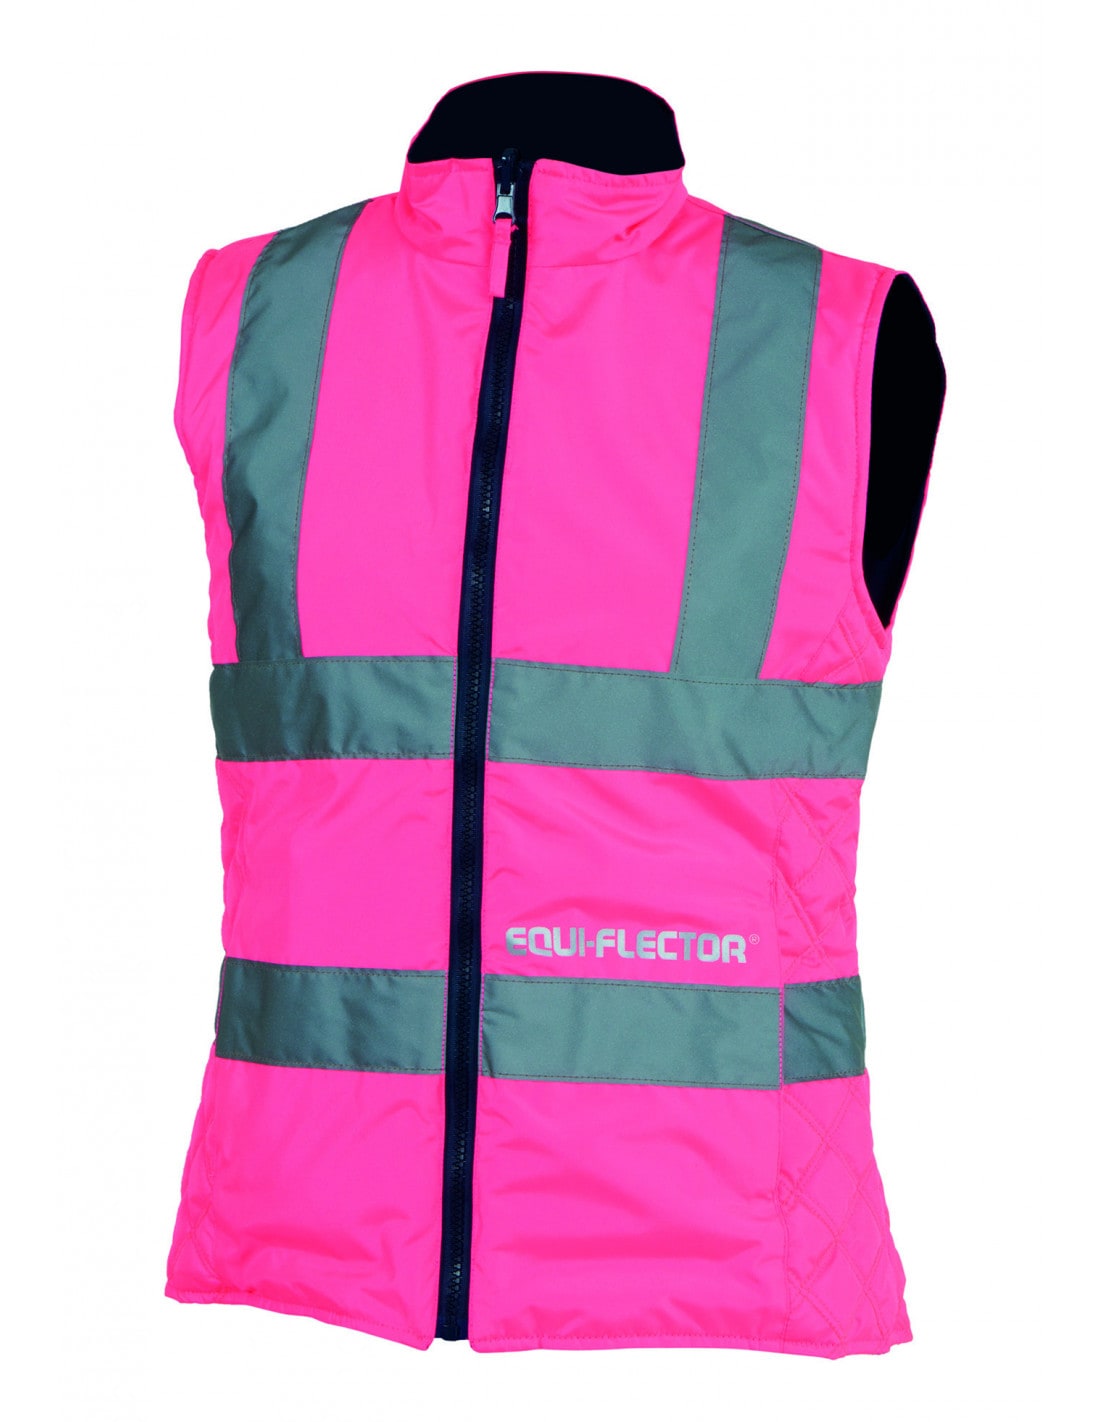 Reflective vest - Bright pink - XS